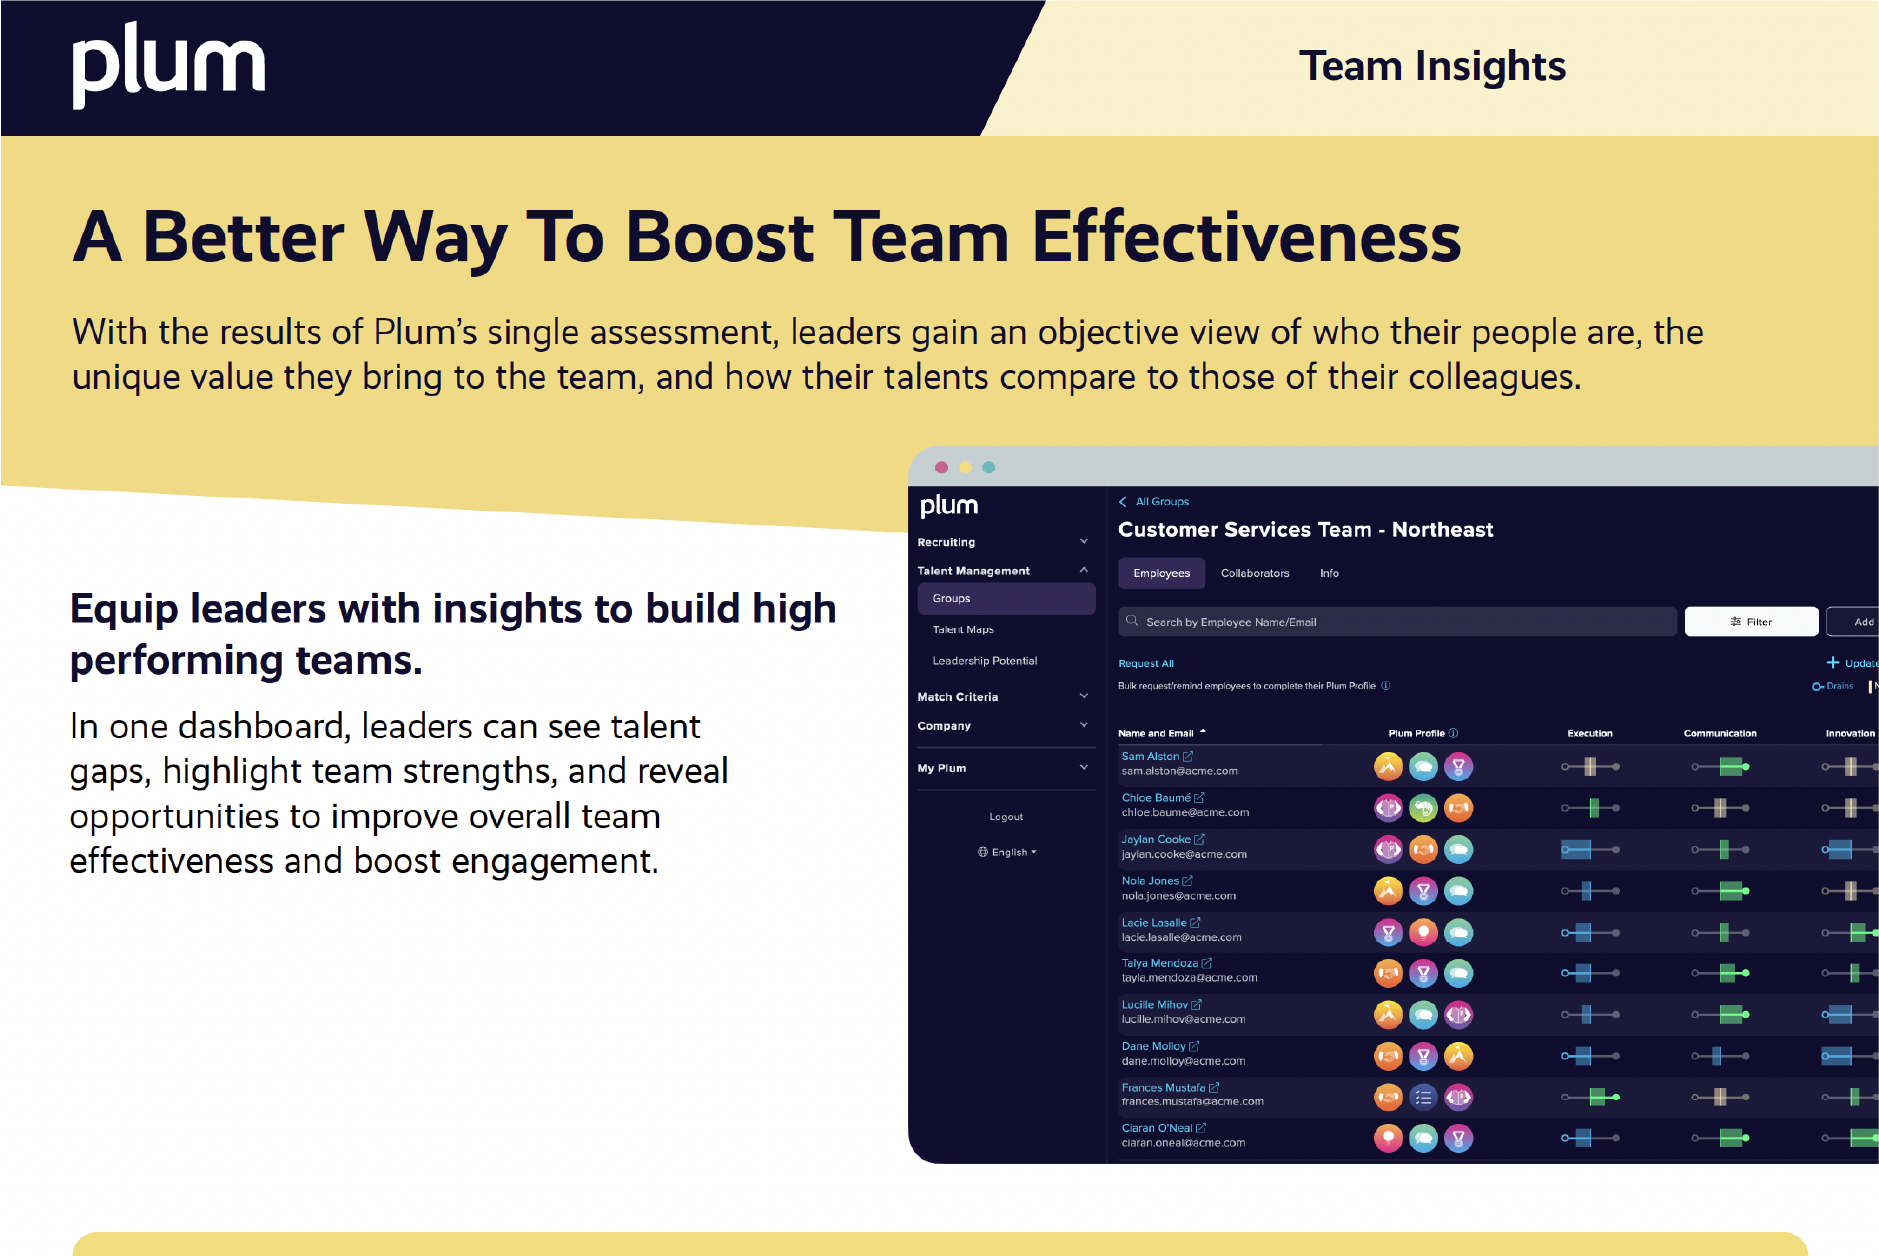 A Better Way to Boost Team Effectiveness